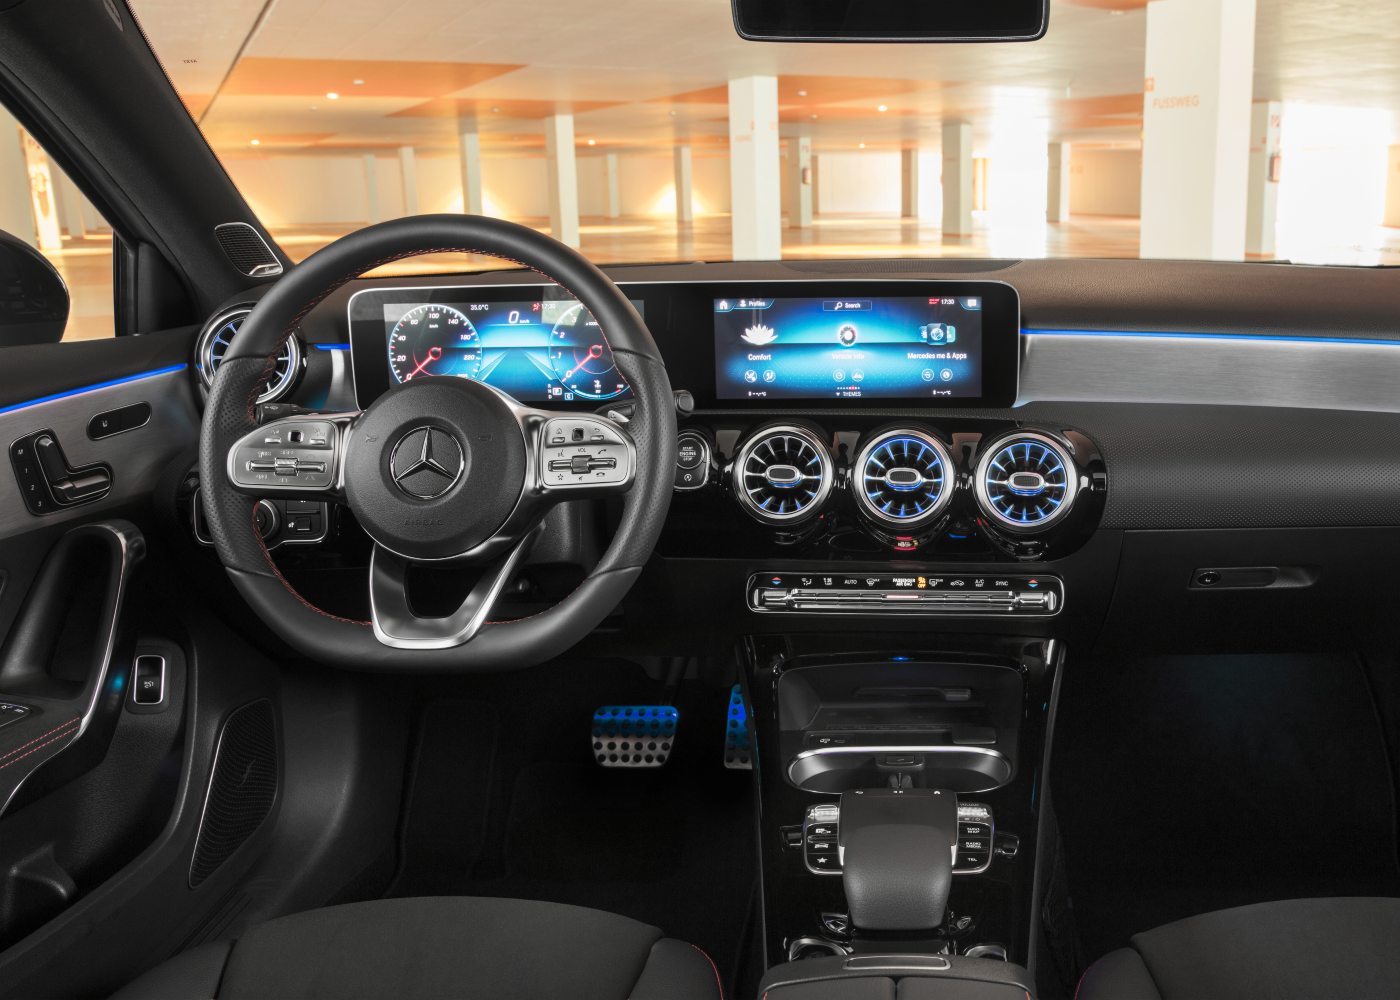 Mercedes Classe A Limousine Interior